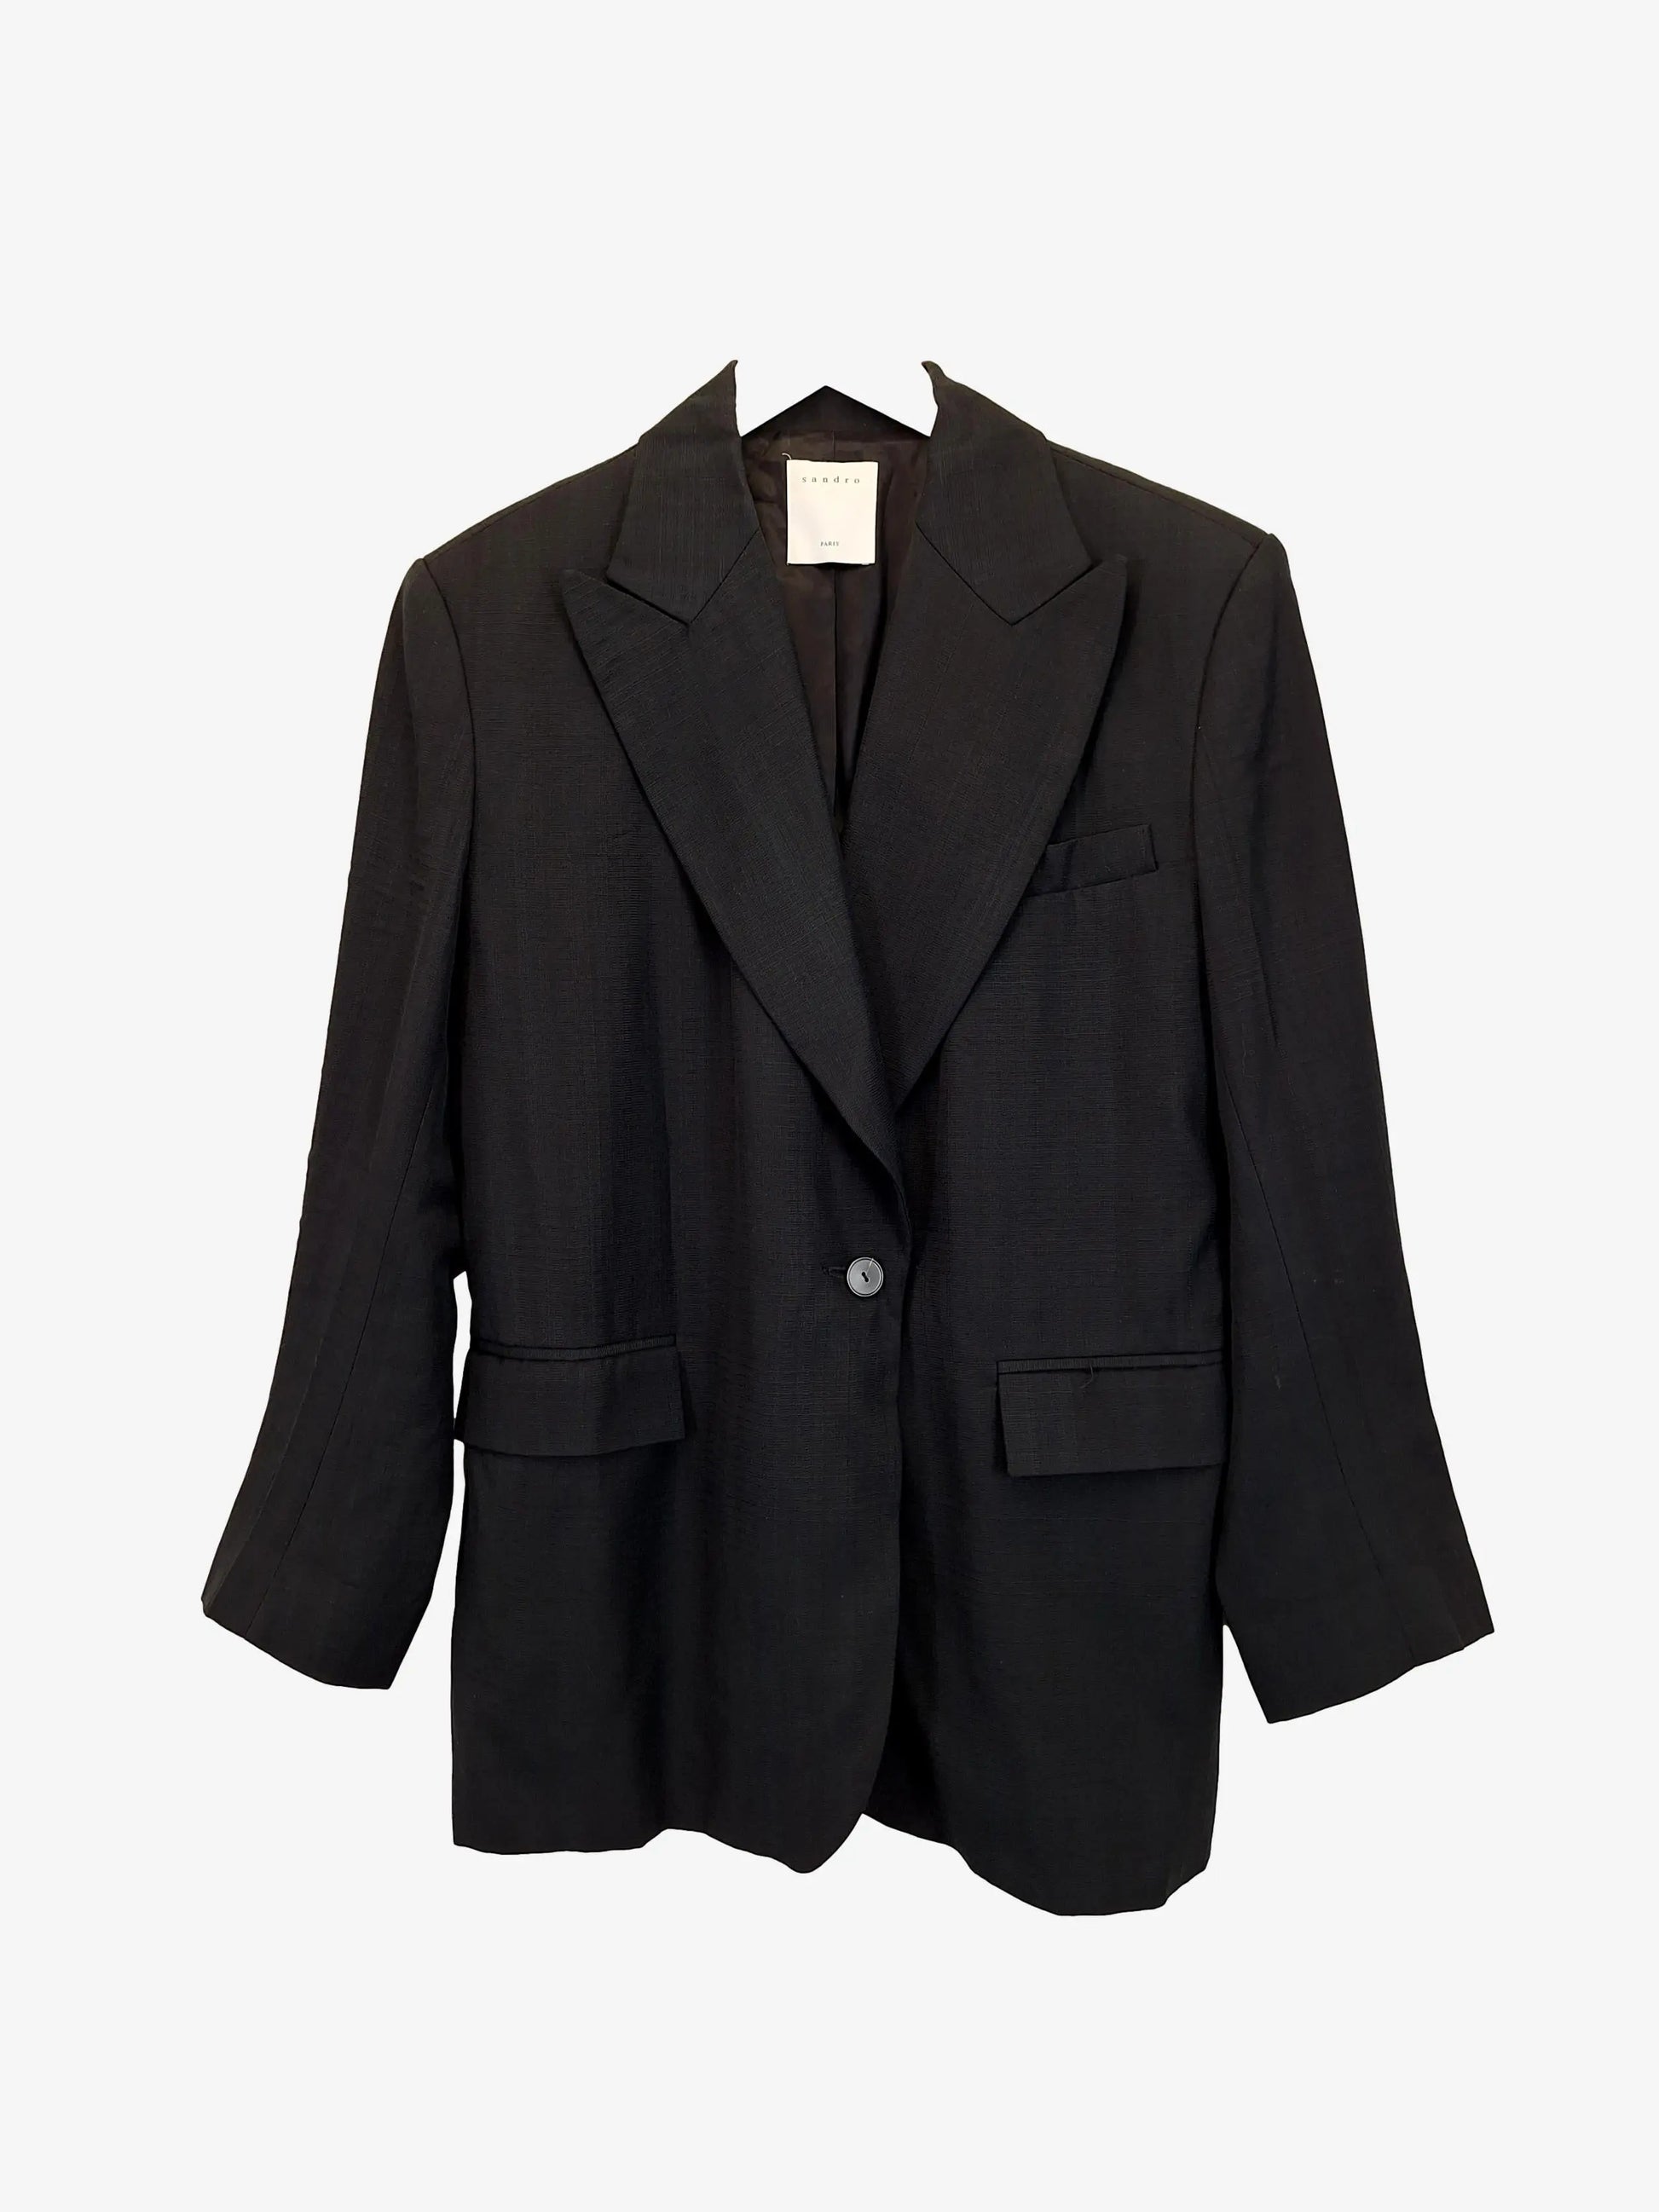 Sandro Paris Staple Blazer Size 10 by SwapUp-Online Second Hand Store-Online Thrift Store